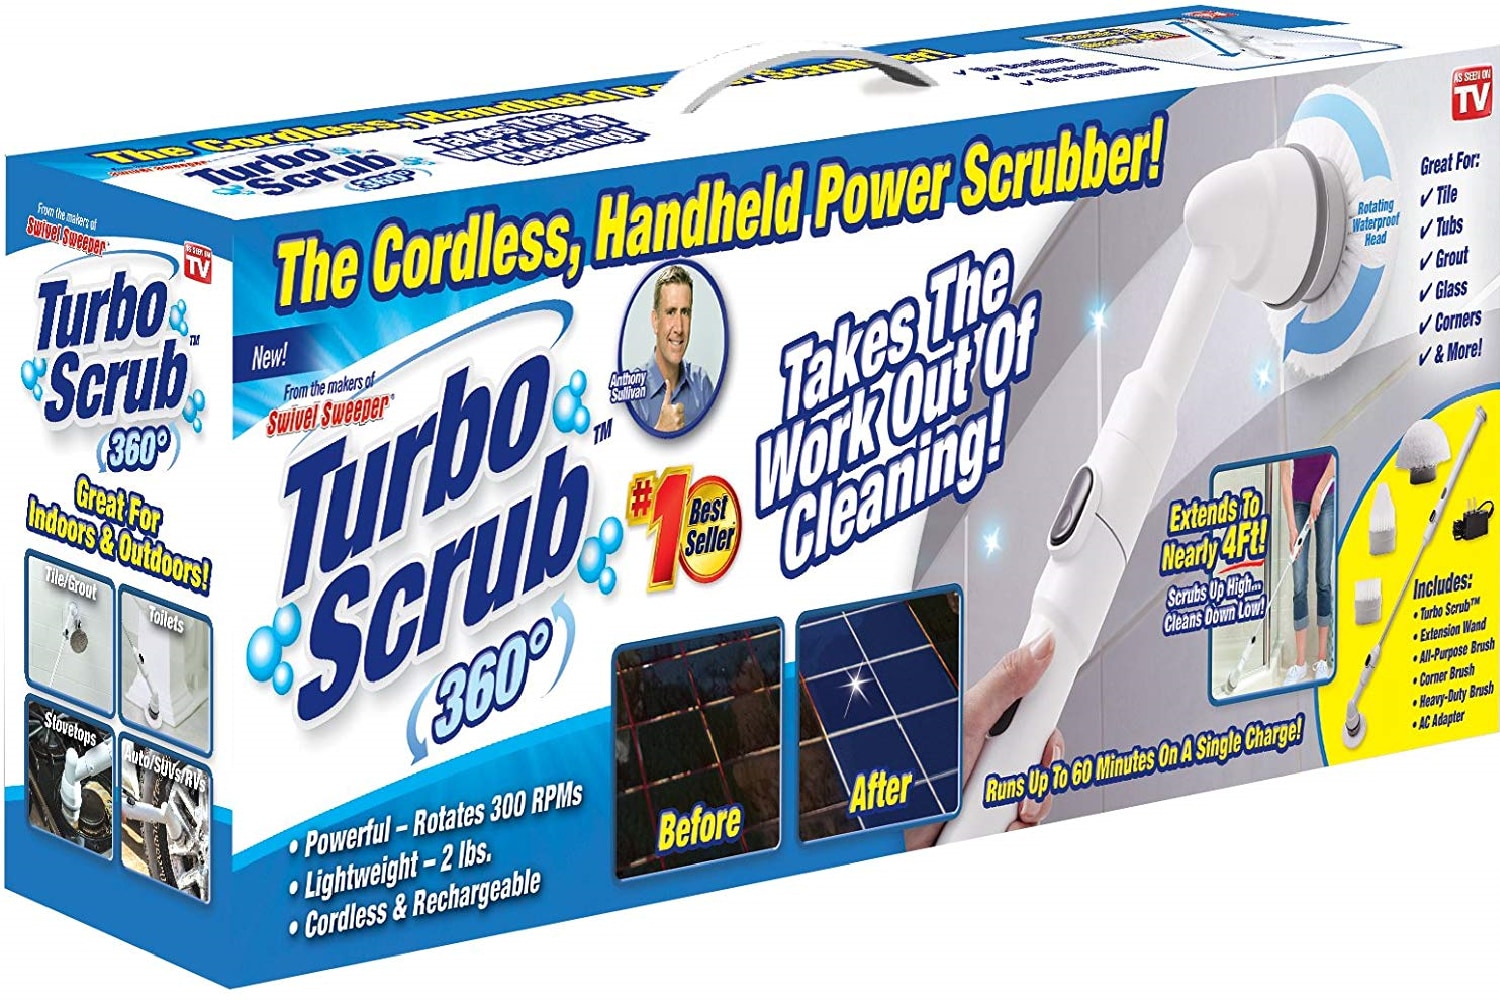 Sun Joe Cordless Handheld 360-Degree Spin Scrubber Brush